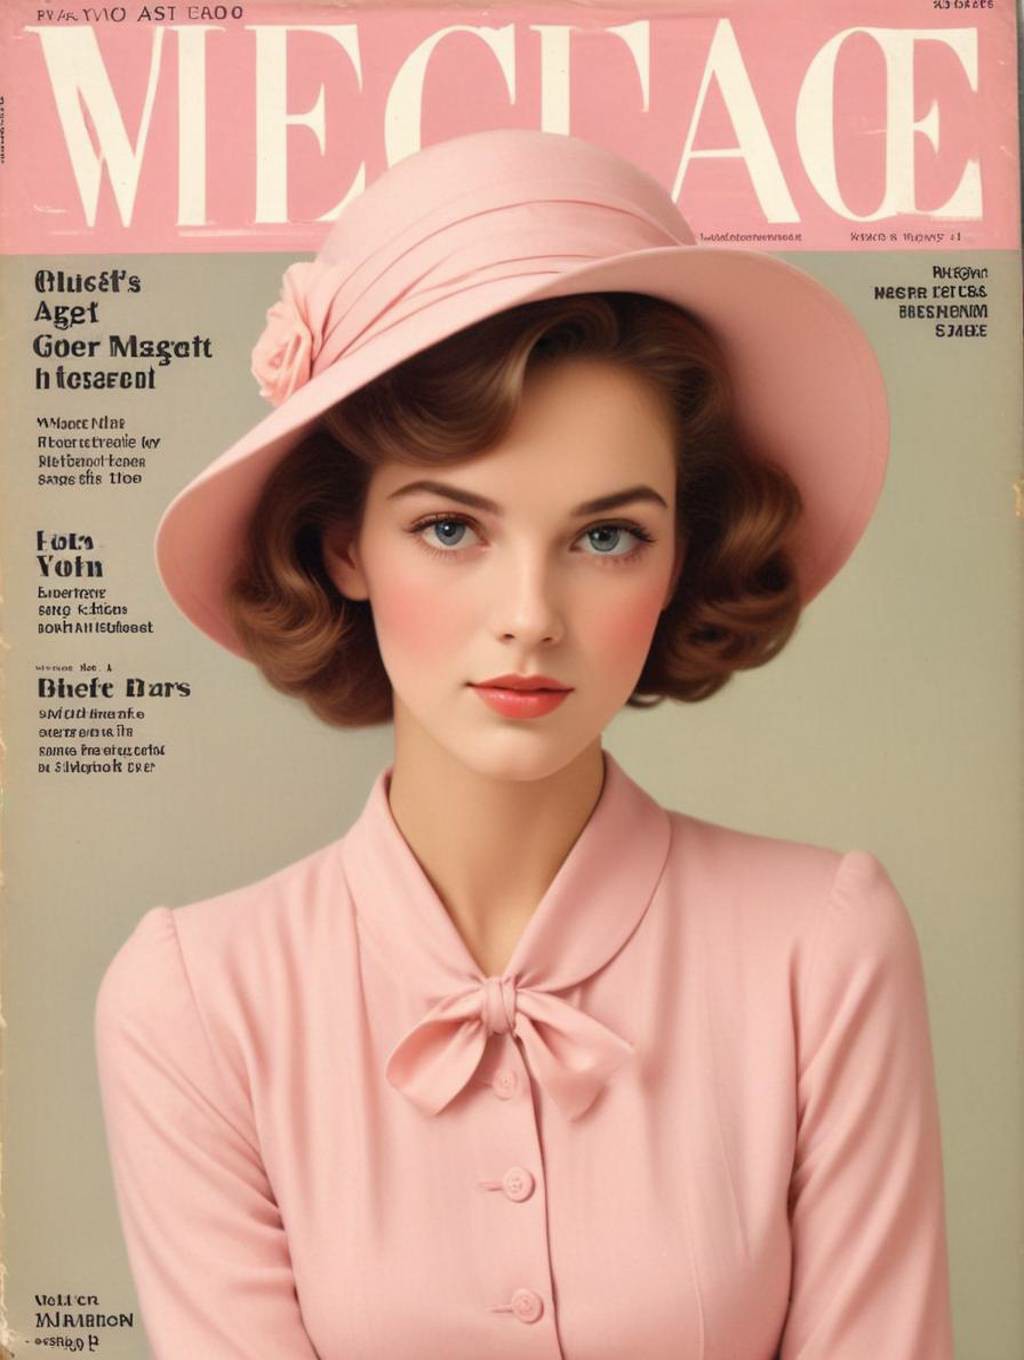 Vintage Magazine Covers Women: Art Portraits & Photo Frames-Theme:6